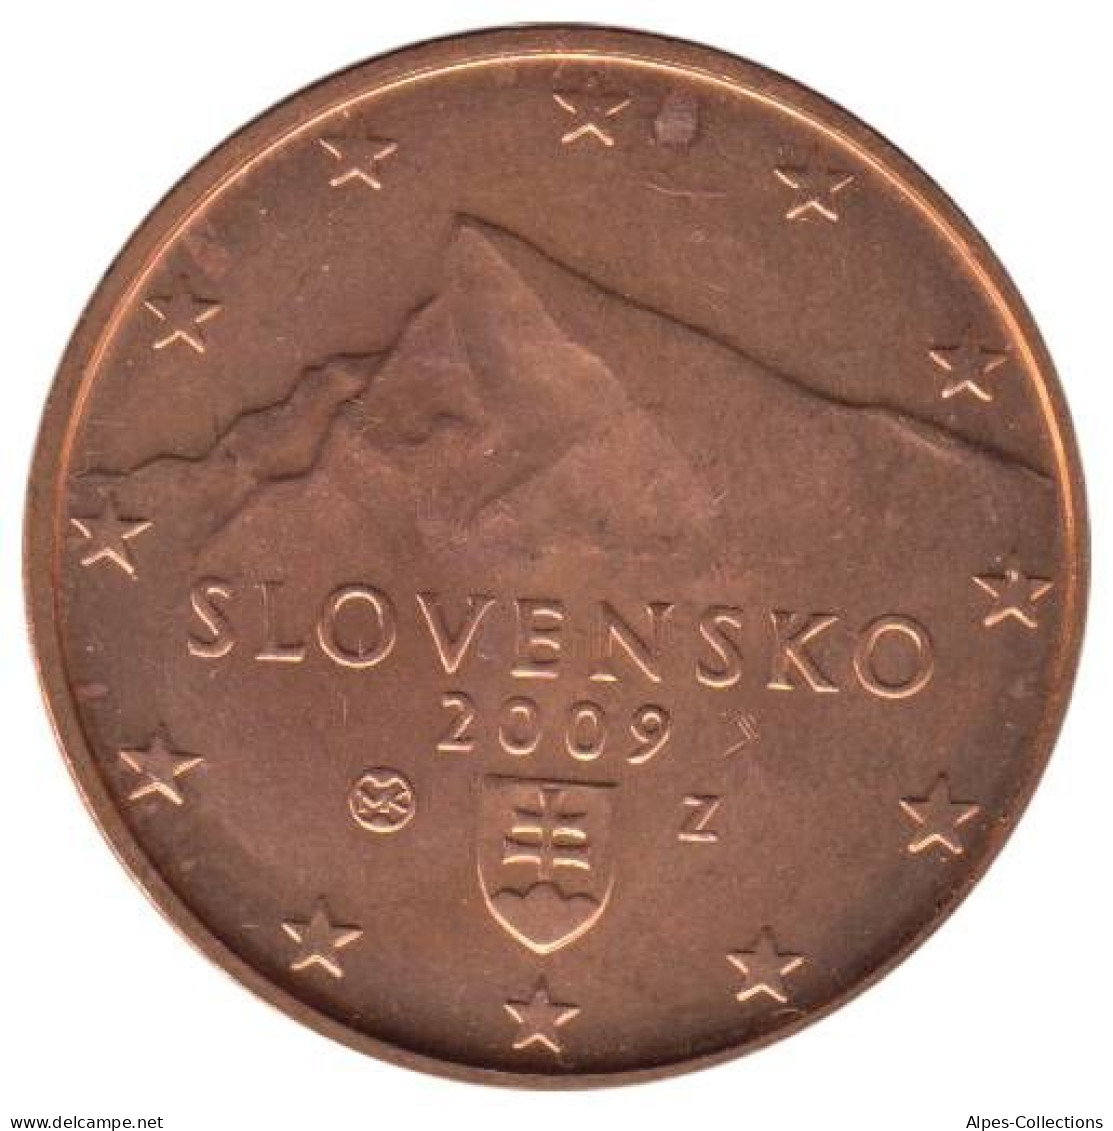 SQ00509.1 - SLOVAQUIE - 5 Cents - 2009 - Slowakei